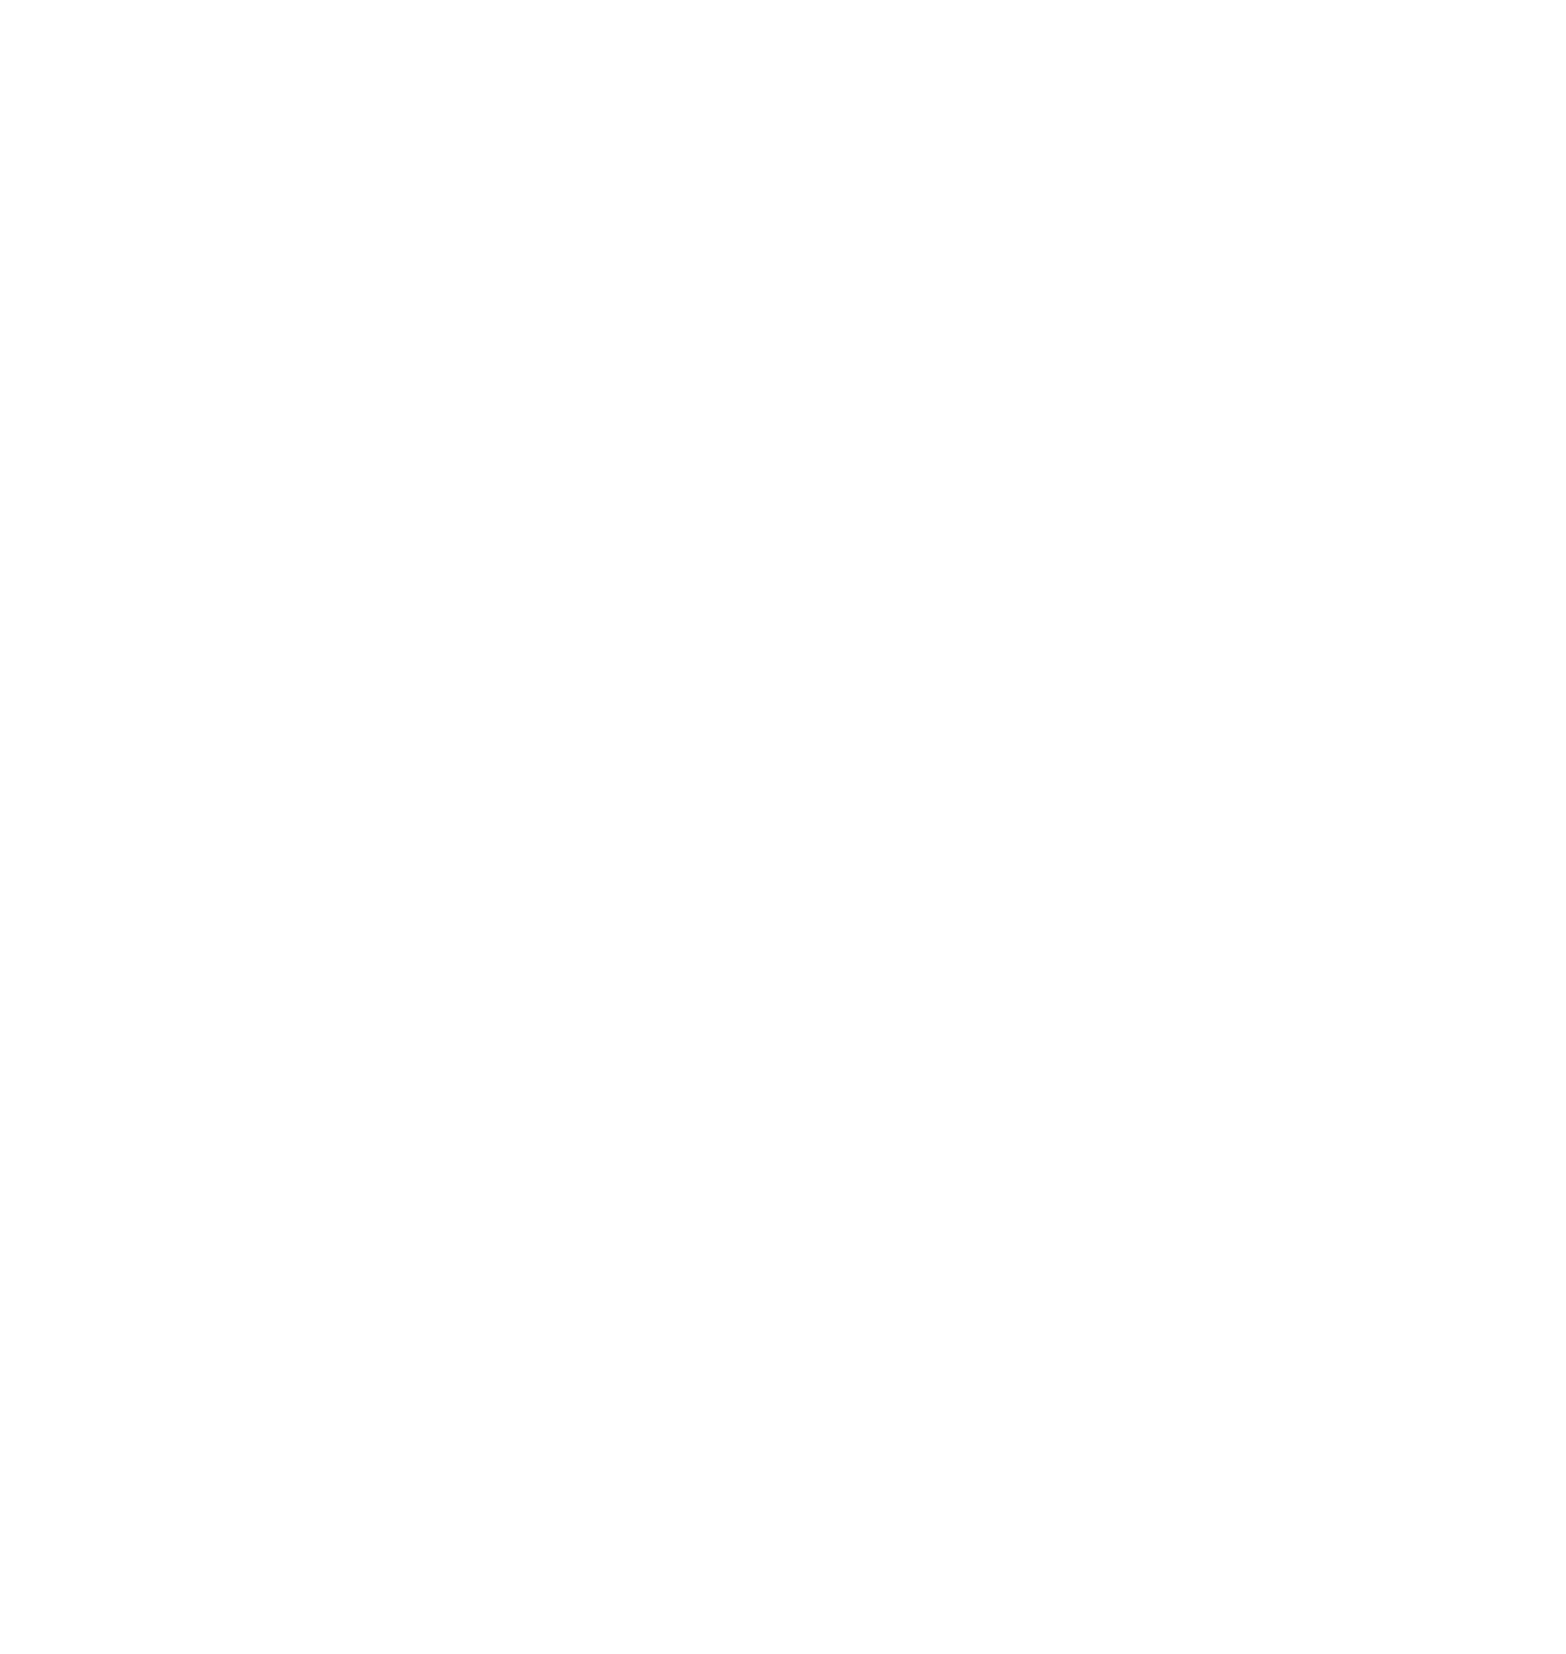 THE ROASTERS | 和歌山から良質なコーヒー豆をお届けする焙煎所・ロースターのウェブサイト